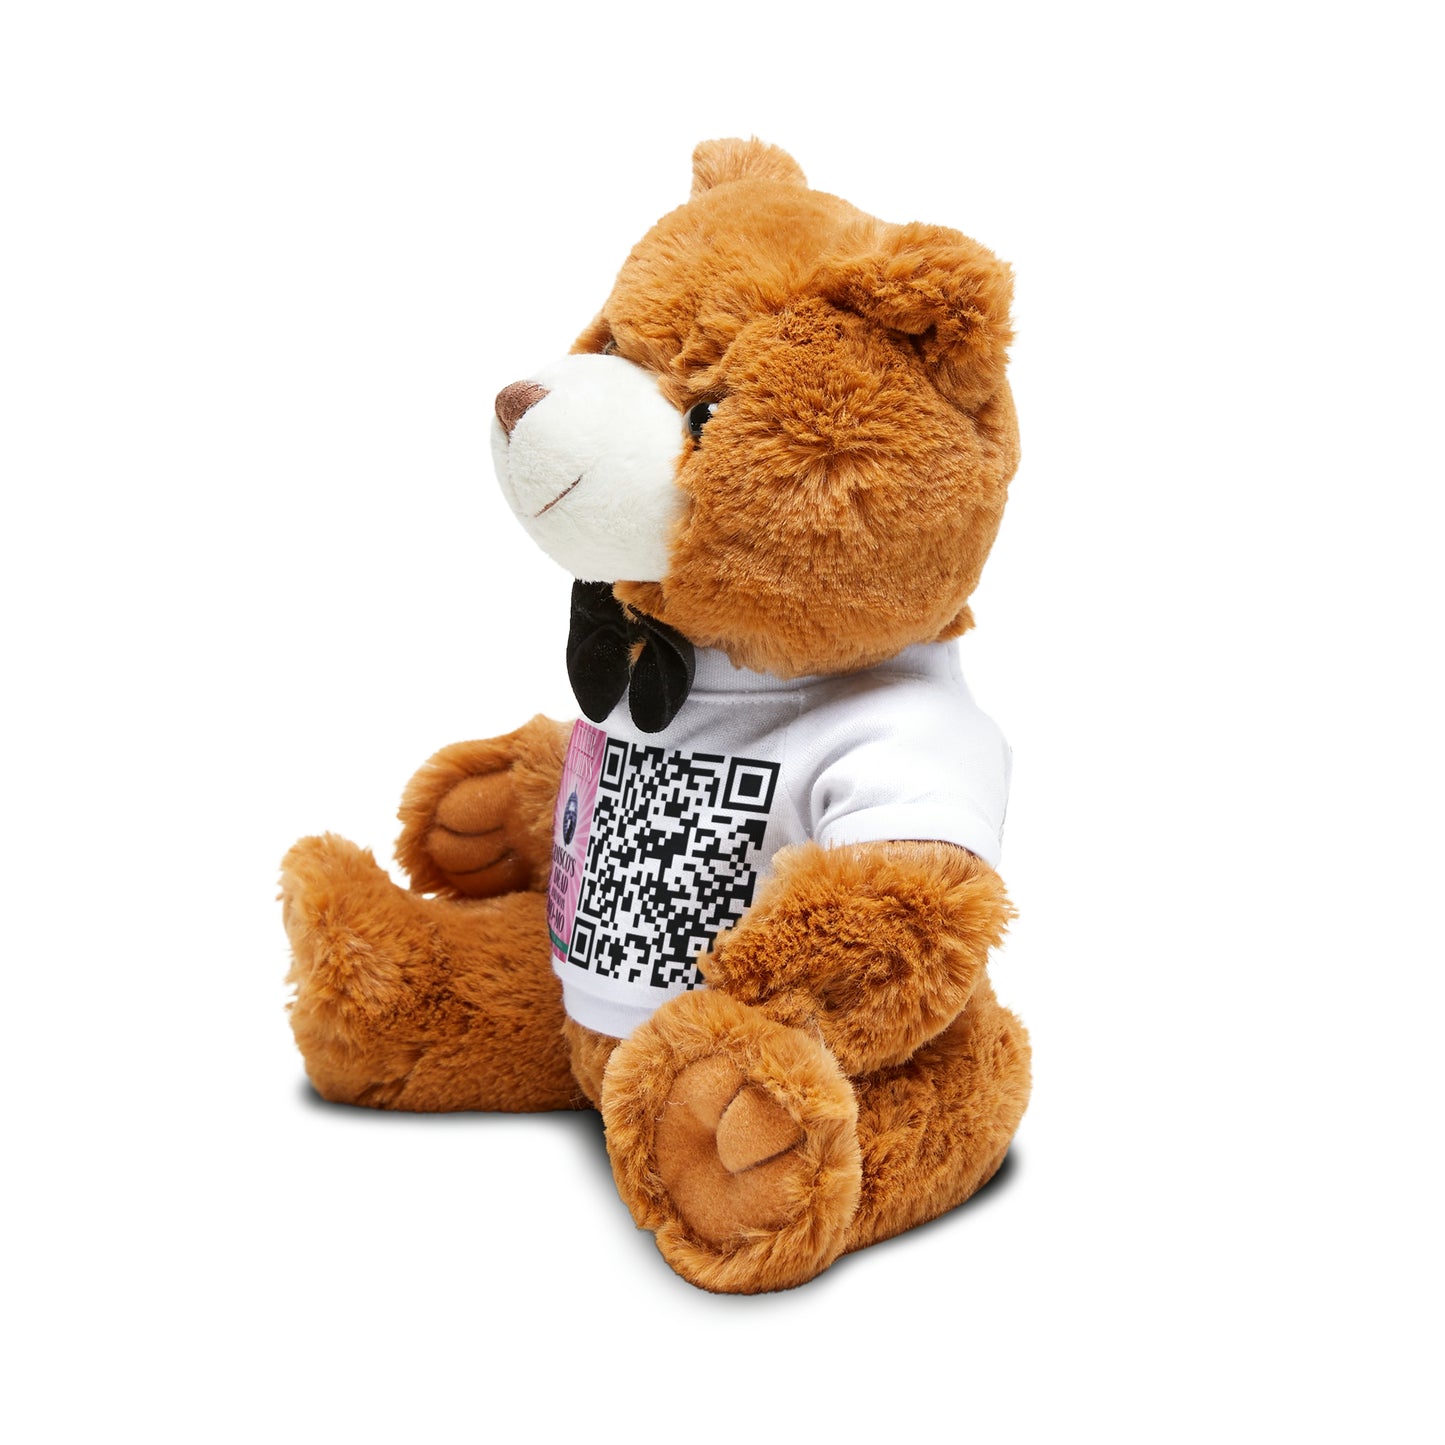 Disco's Dead and so is Mo-Mo - Teddy Bear